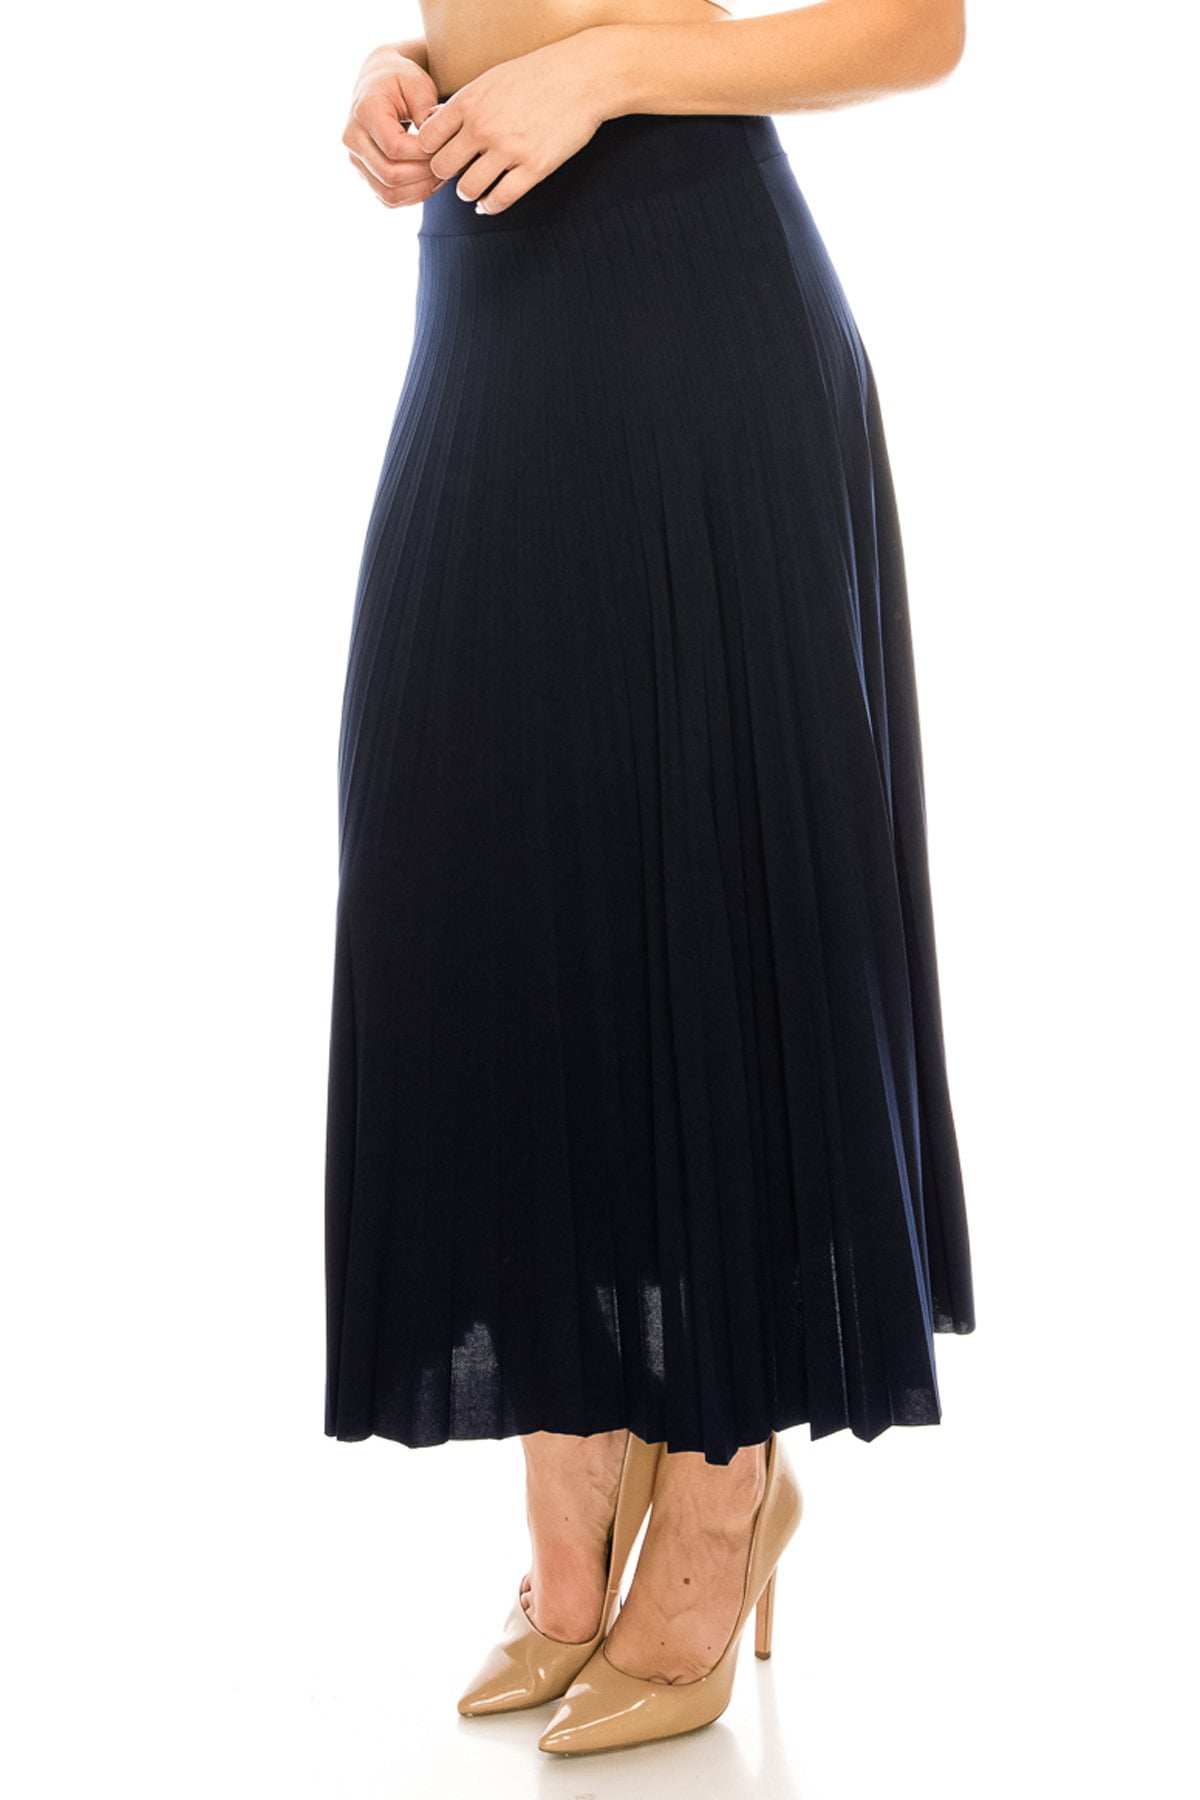 Diana Fashion Women Pleated Midi Skirt Black Adult XL